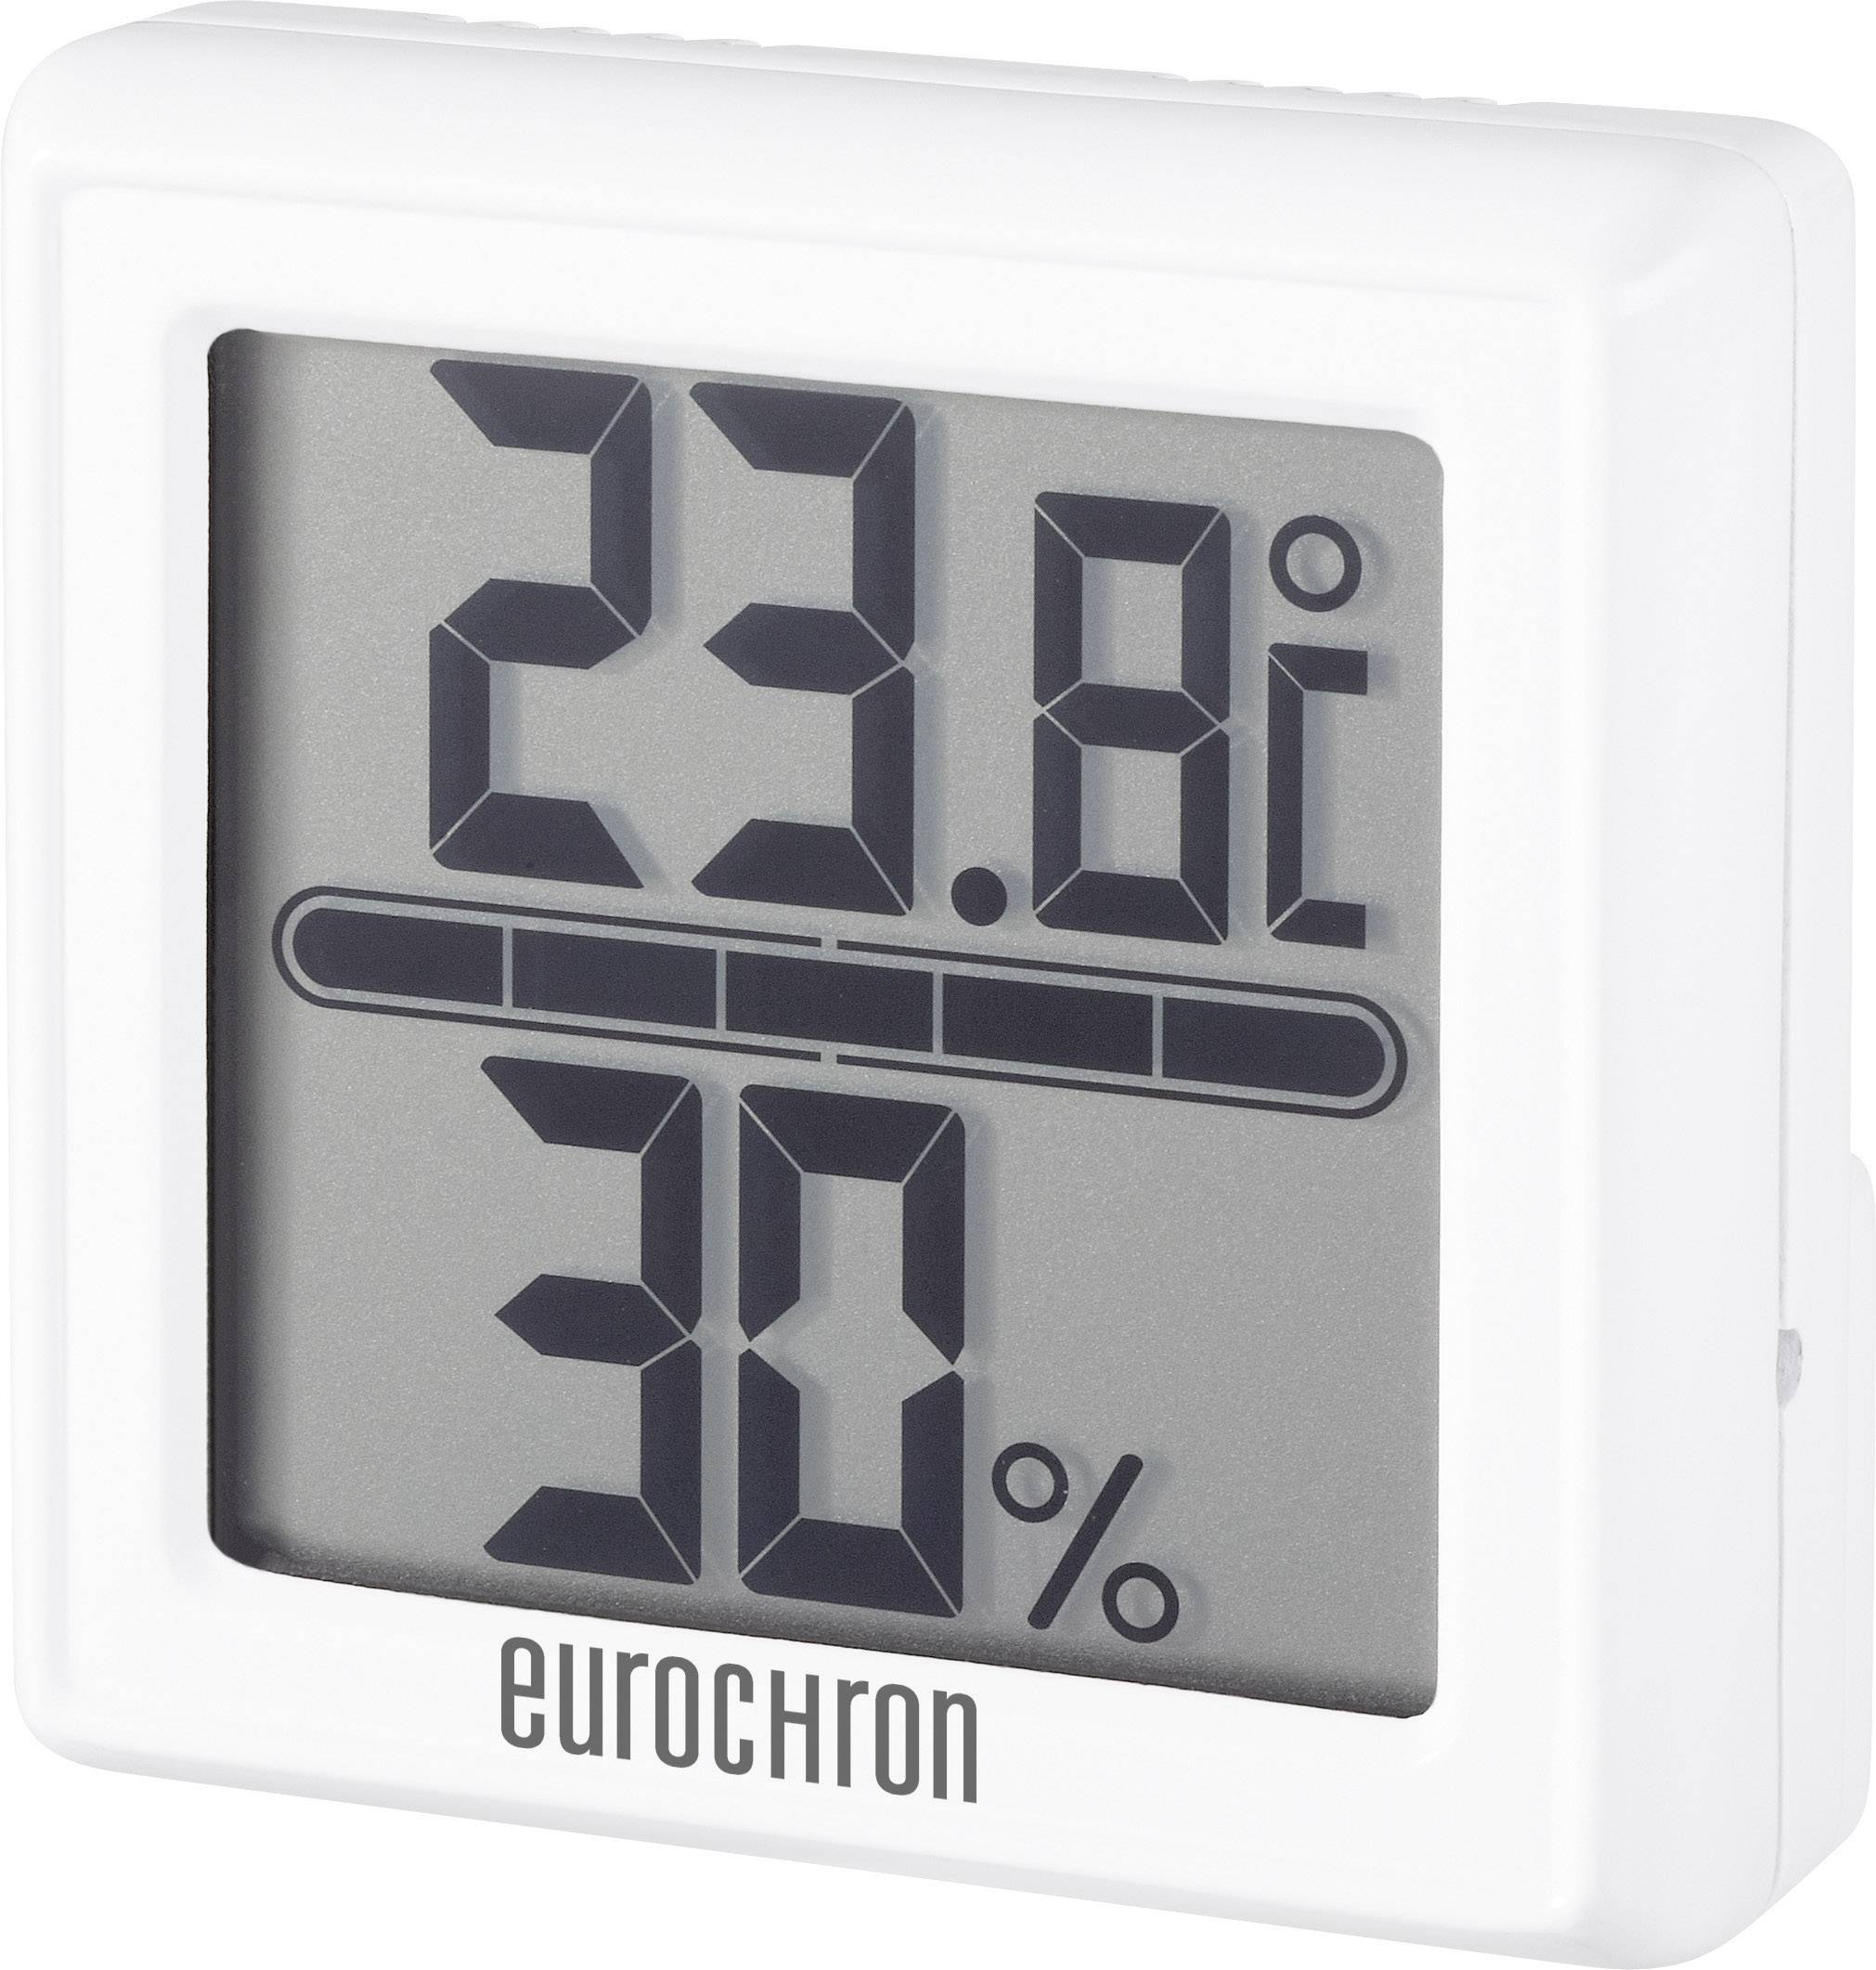 eurochron clock manual